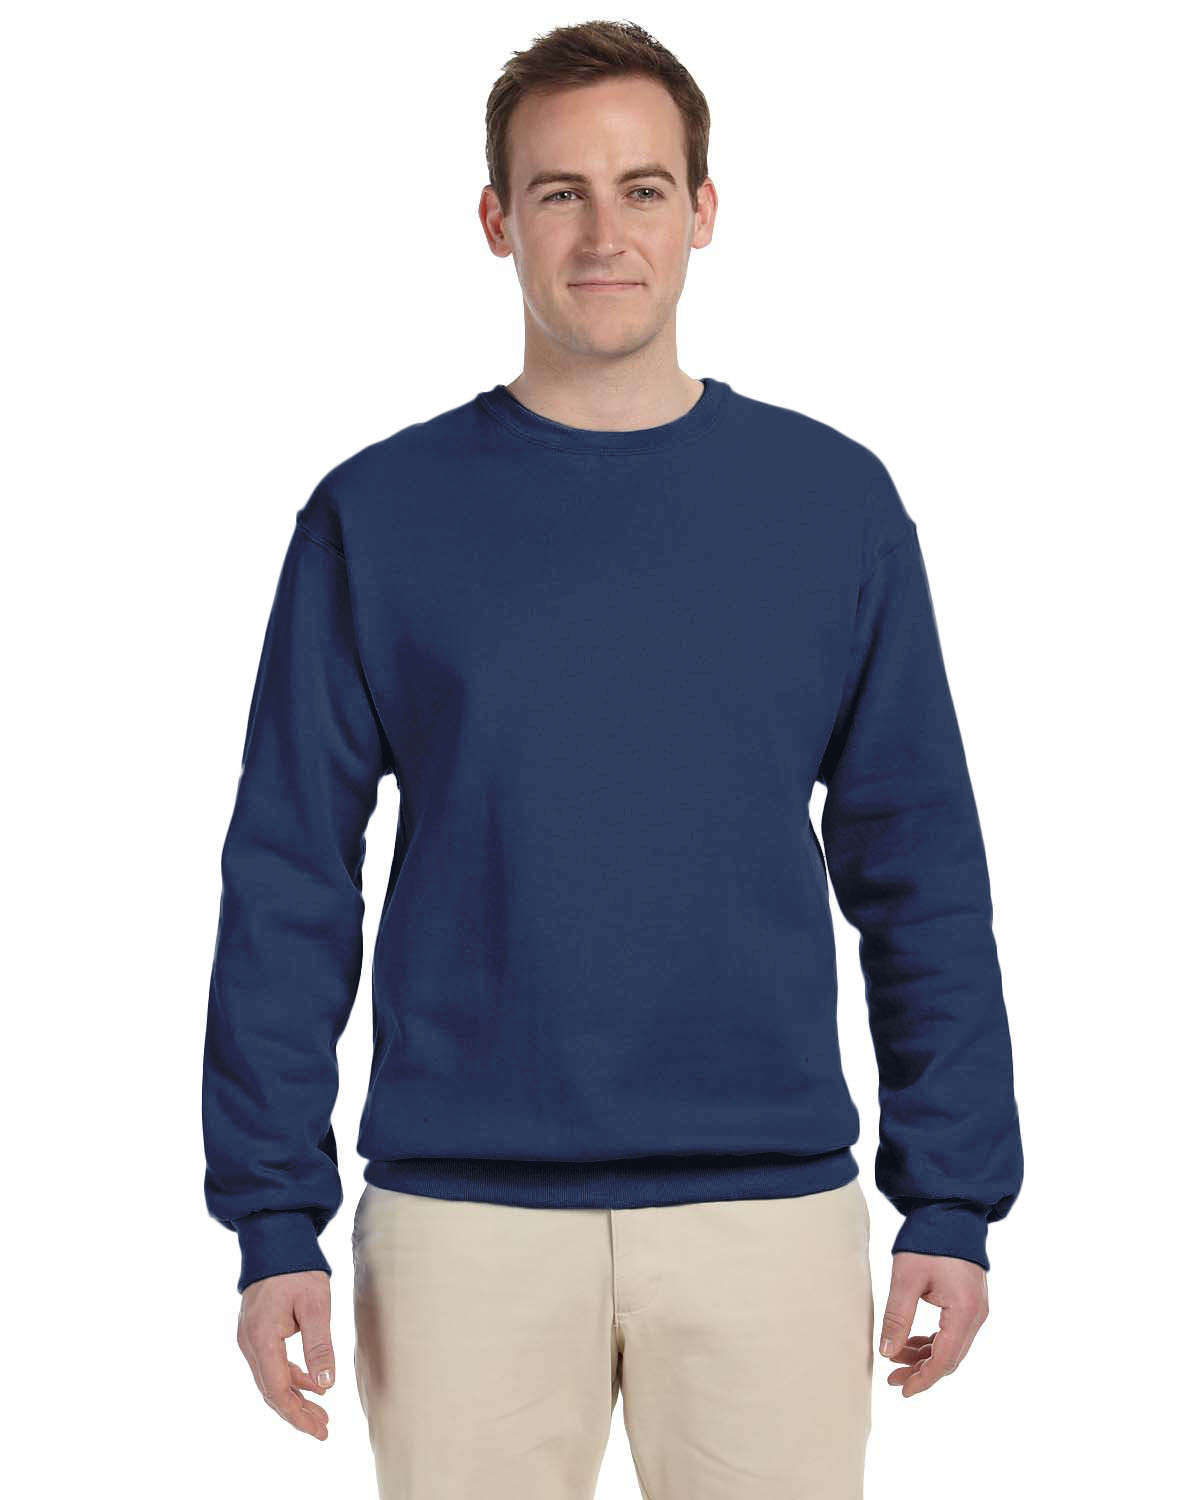 Custom Imprinted Men's Sweatshirts - Jackson Signs